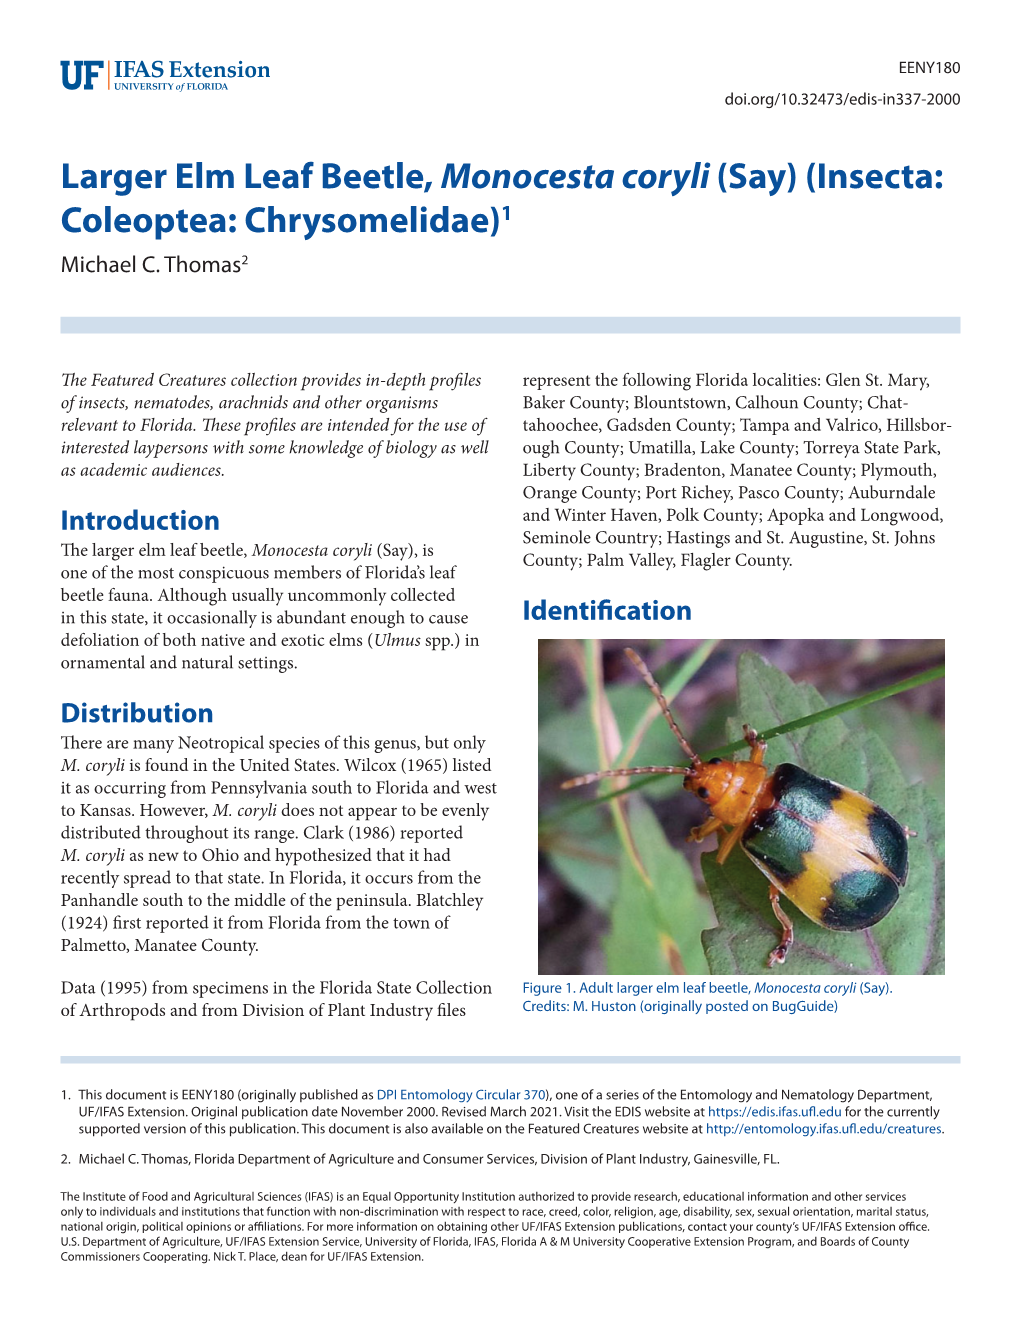 Larger Elm Leaf Beetle, Monocesta Coryli (Say) (Insecta: Coleoptea: Chrysomelidae)1 Michael C